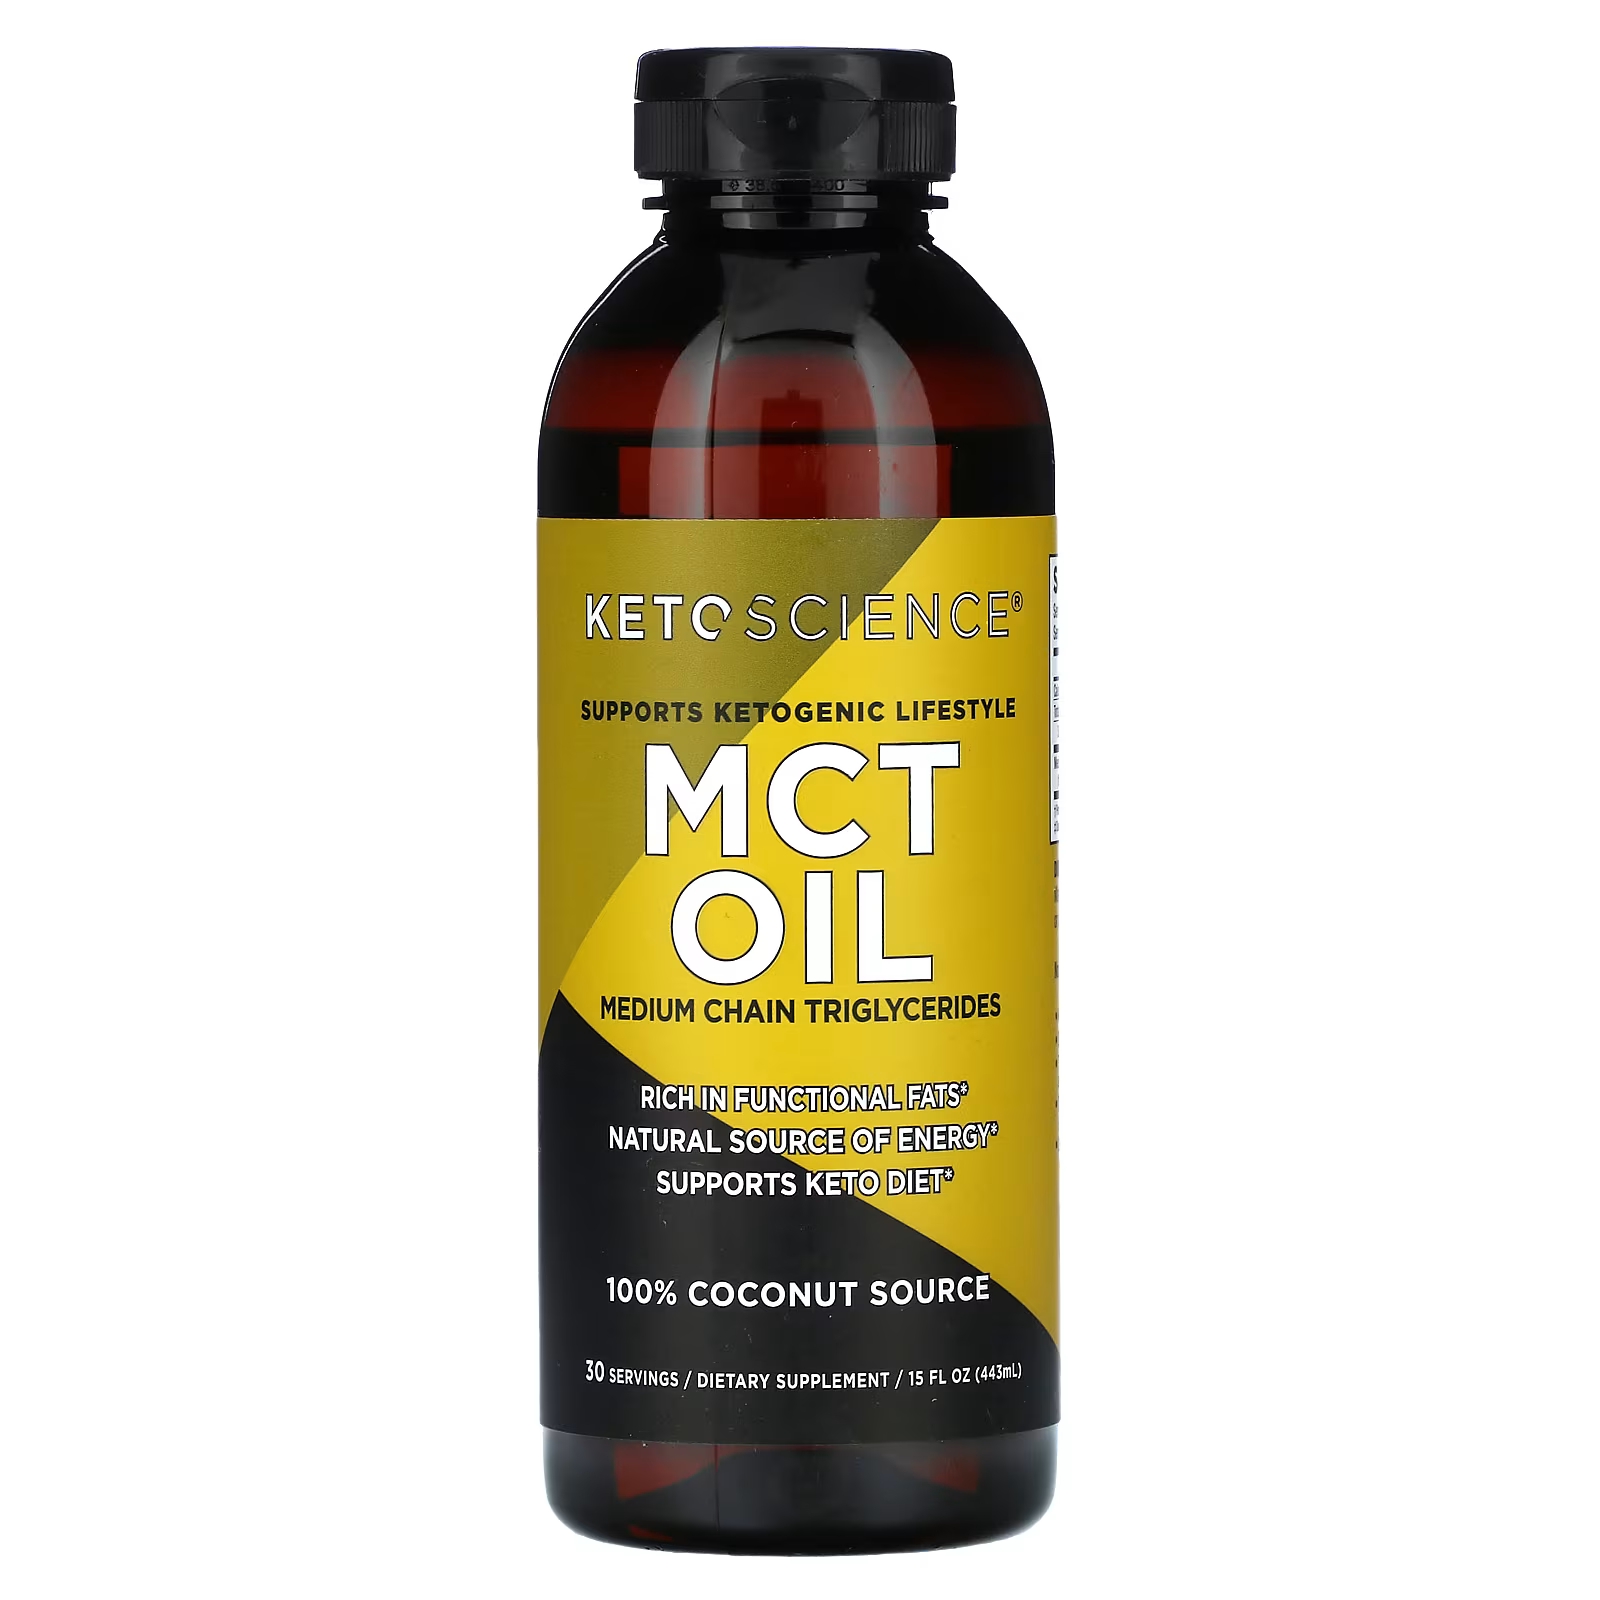 Keto Science Масло MCT, 15 жидких унций (443 мл) dr murray s super foods keto coconut creamer vanilla 16 oz 453 5 g